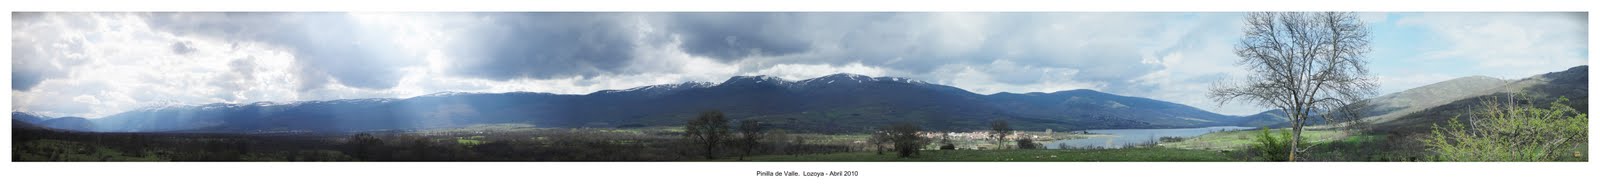 Pinilla-del-Valle.-Lozoya---Abril-2010_web.jpg